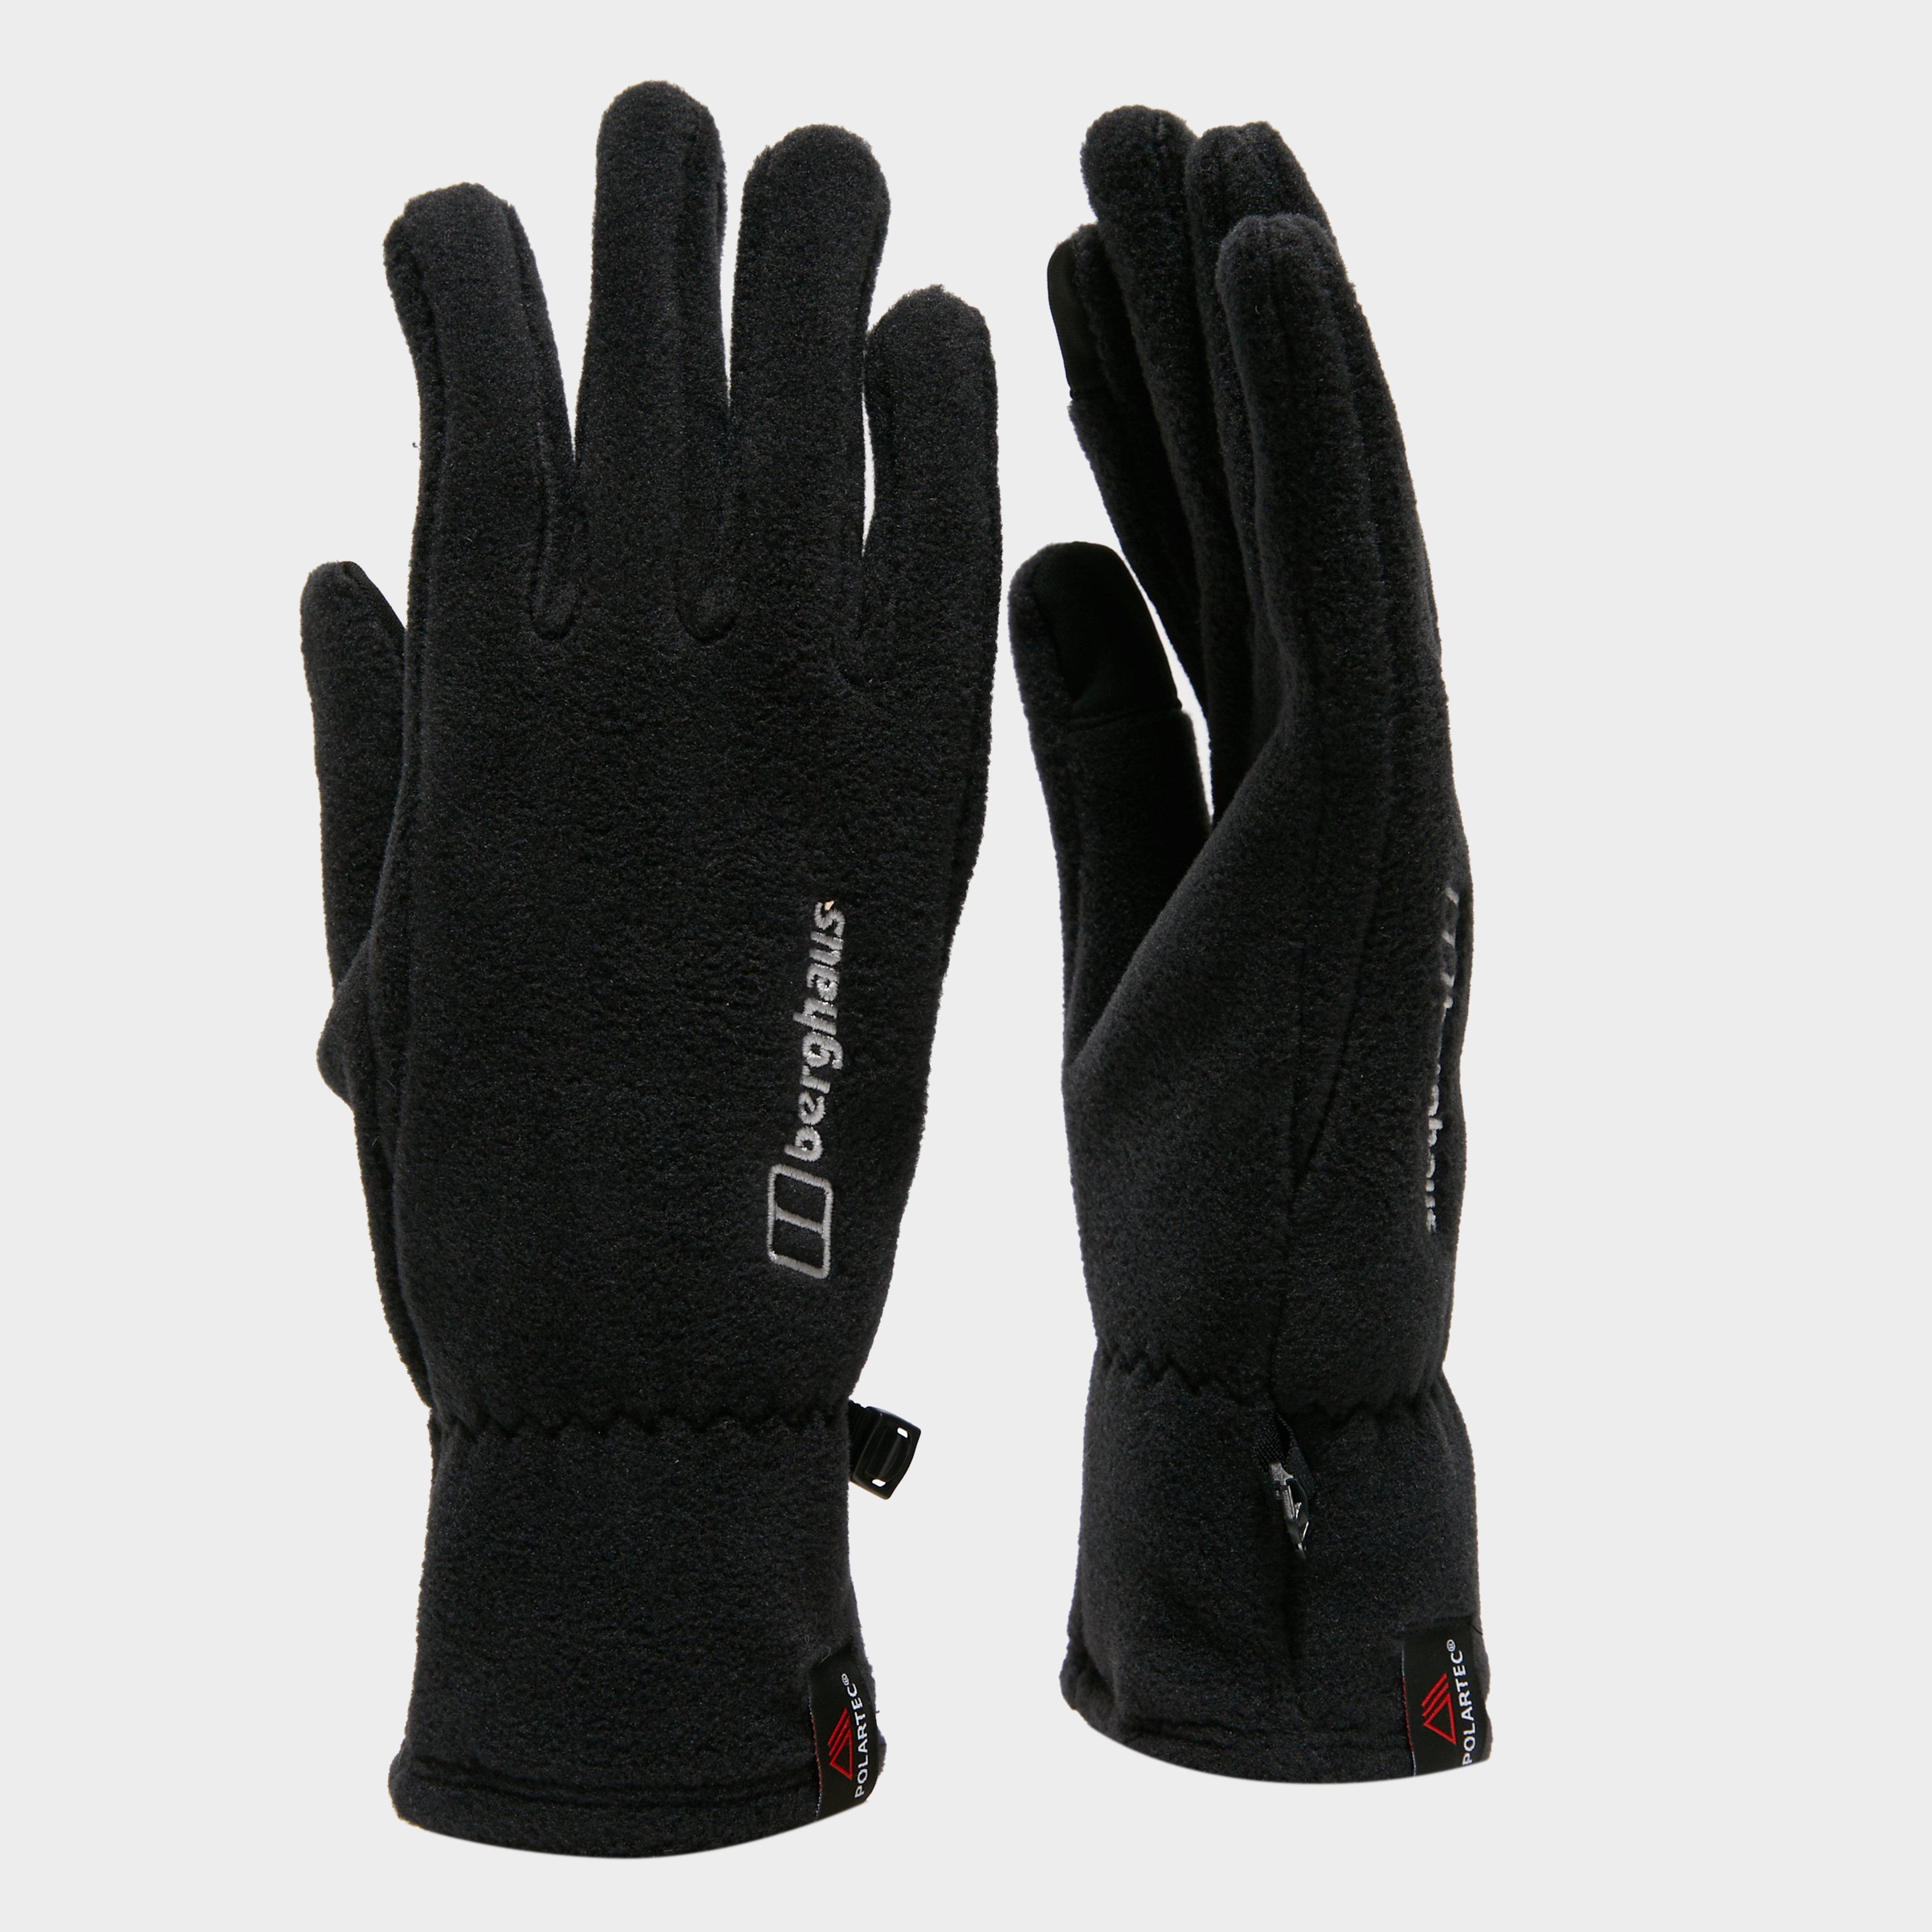 Berghaus Mens Prism Polartec Gloves - Black/glove  Black/glove